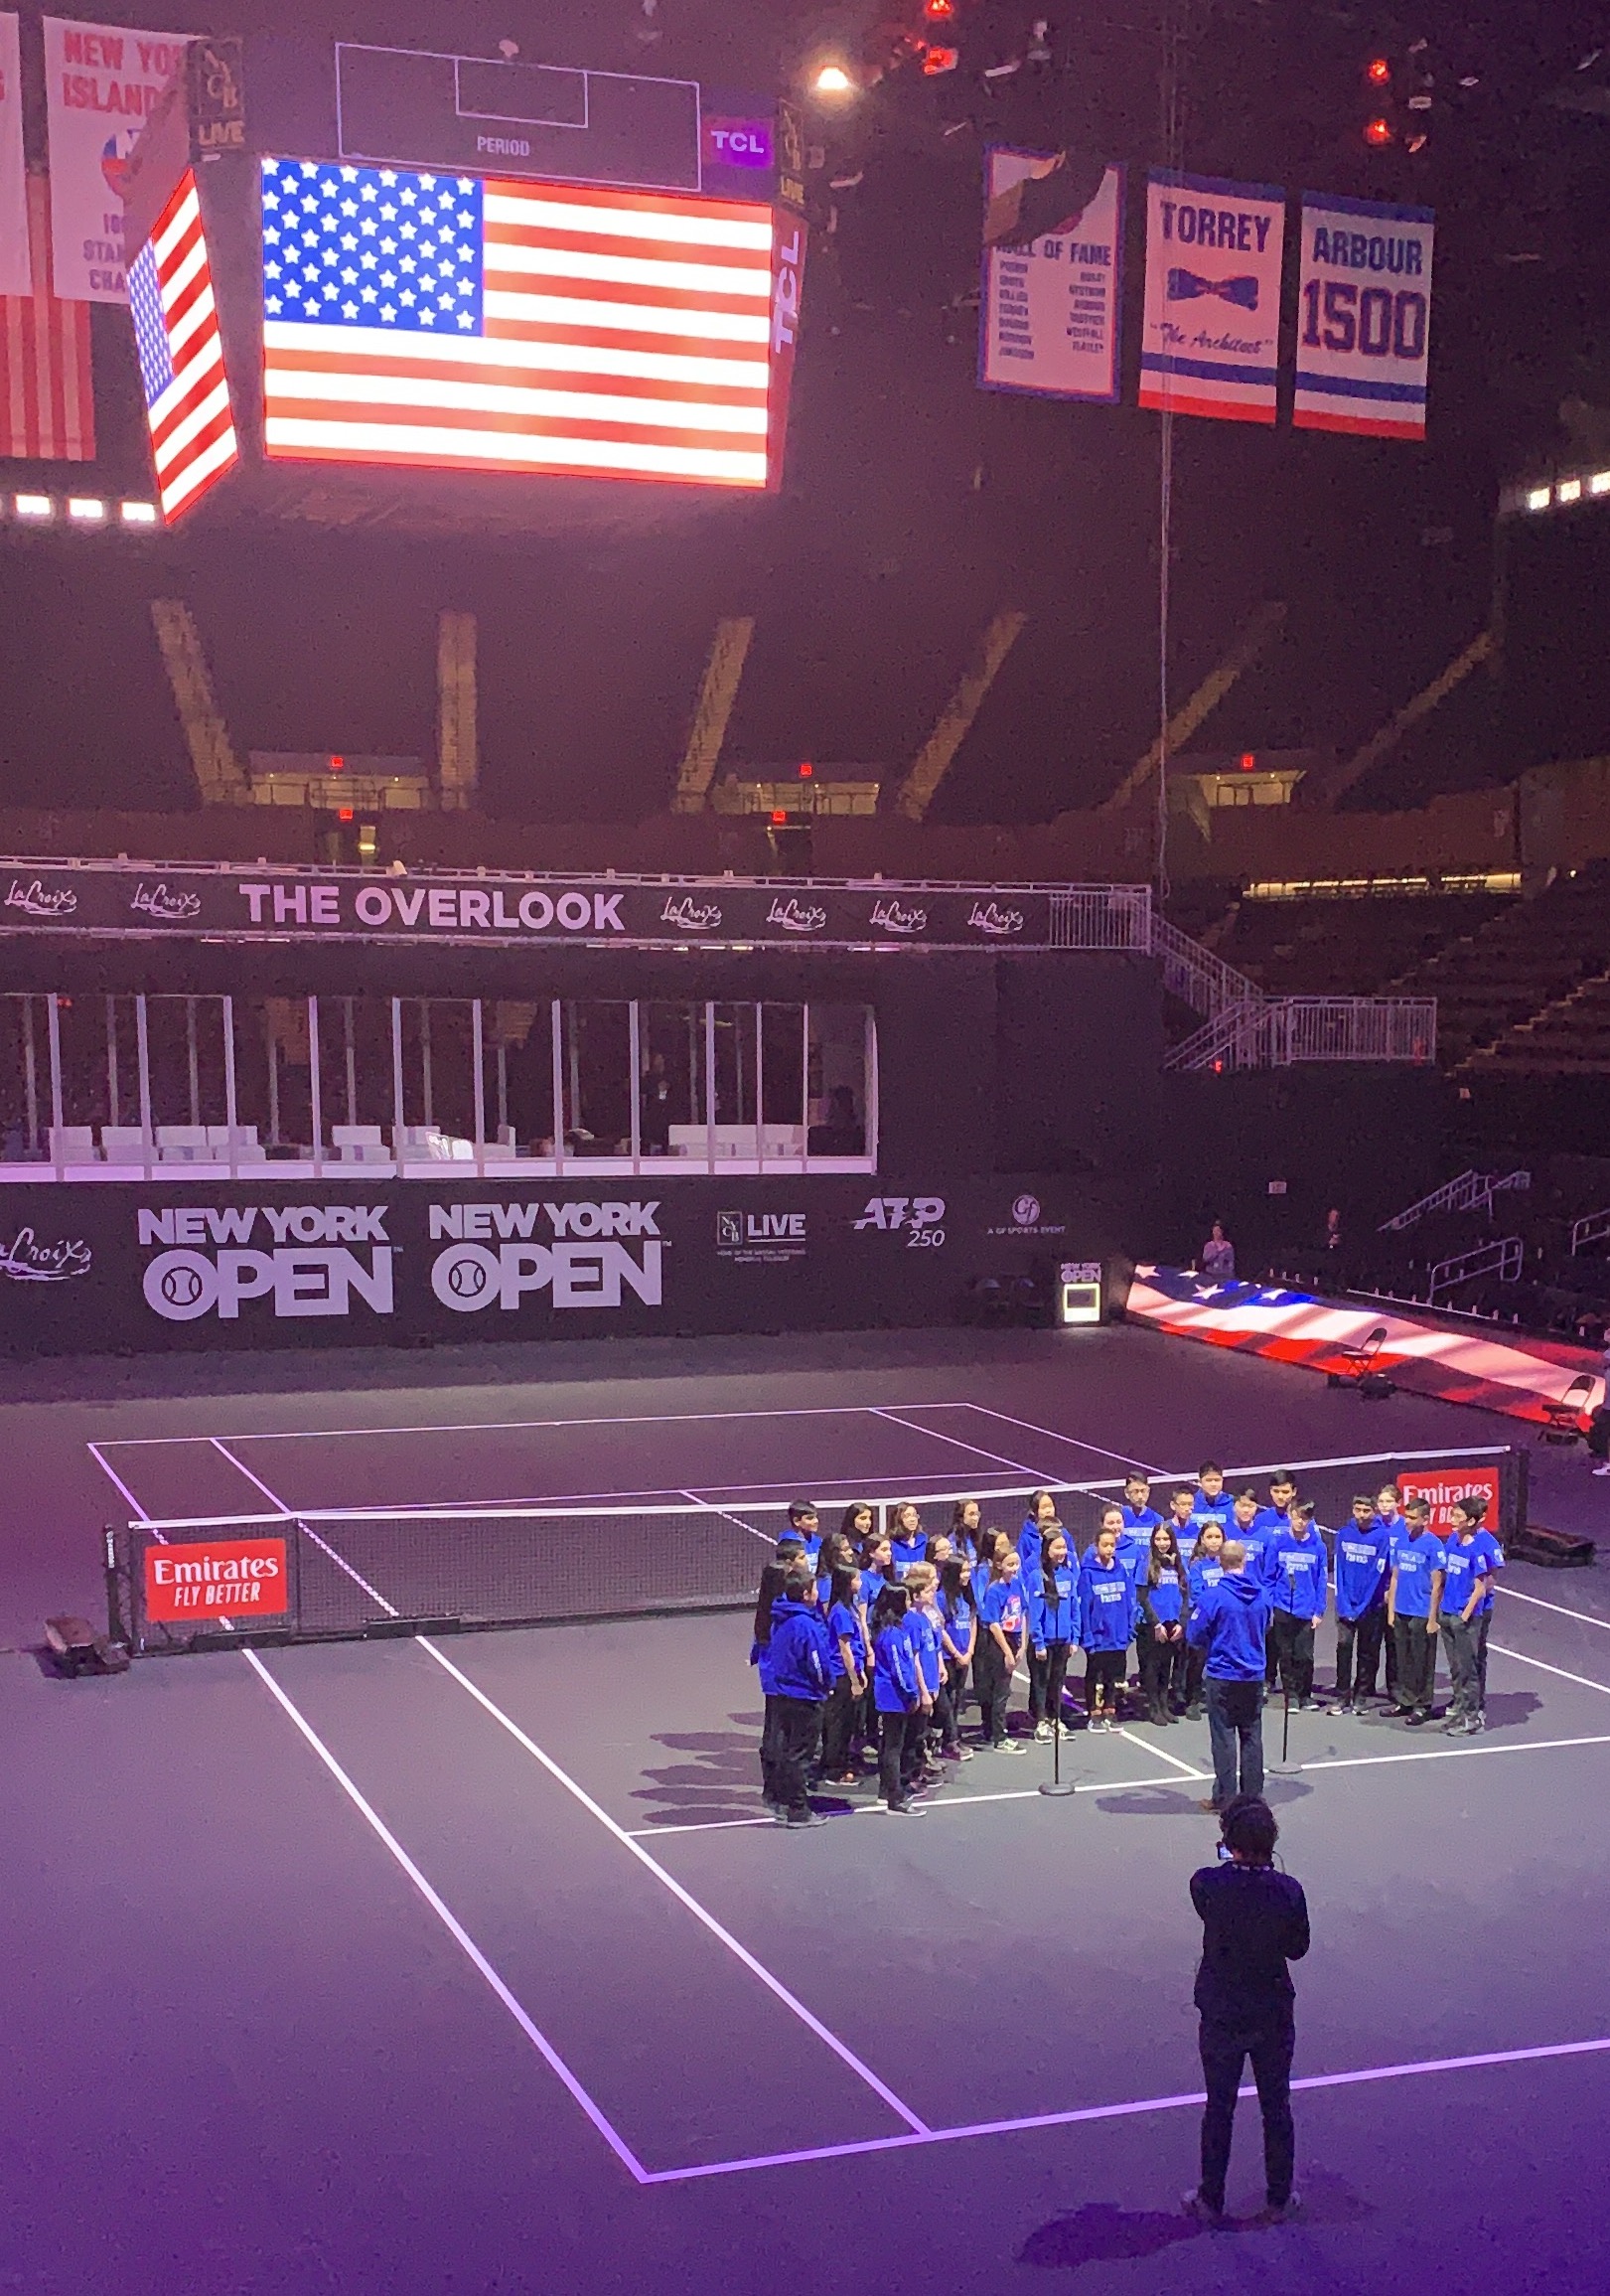 Herricks Middle School's Chamber Choir performed the National Anthem at Nassau Coliseum for the New York Open Tennis Tournament. (Photo courtesy of Herricks Public Schools)